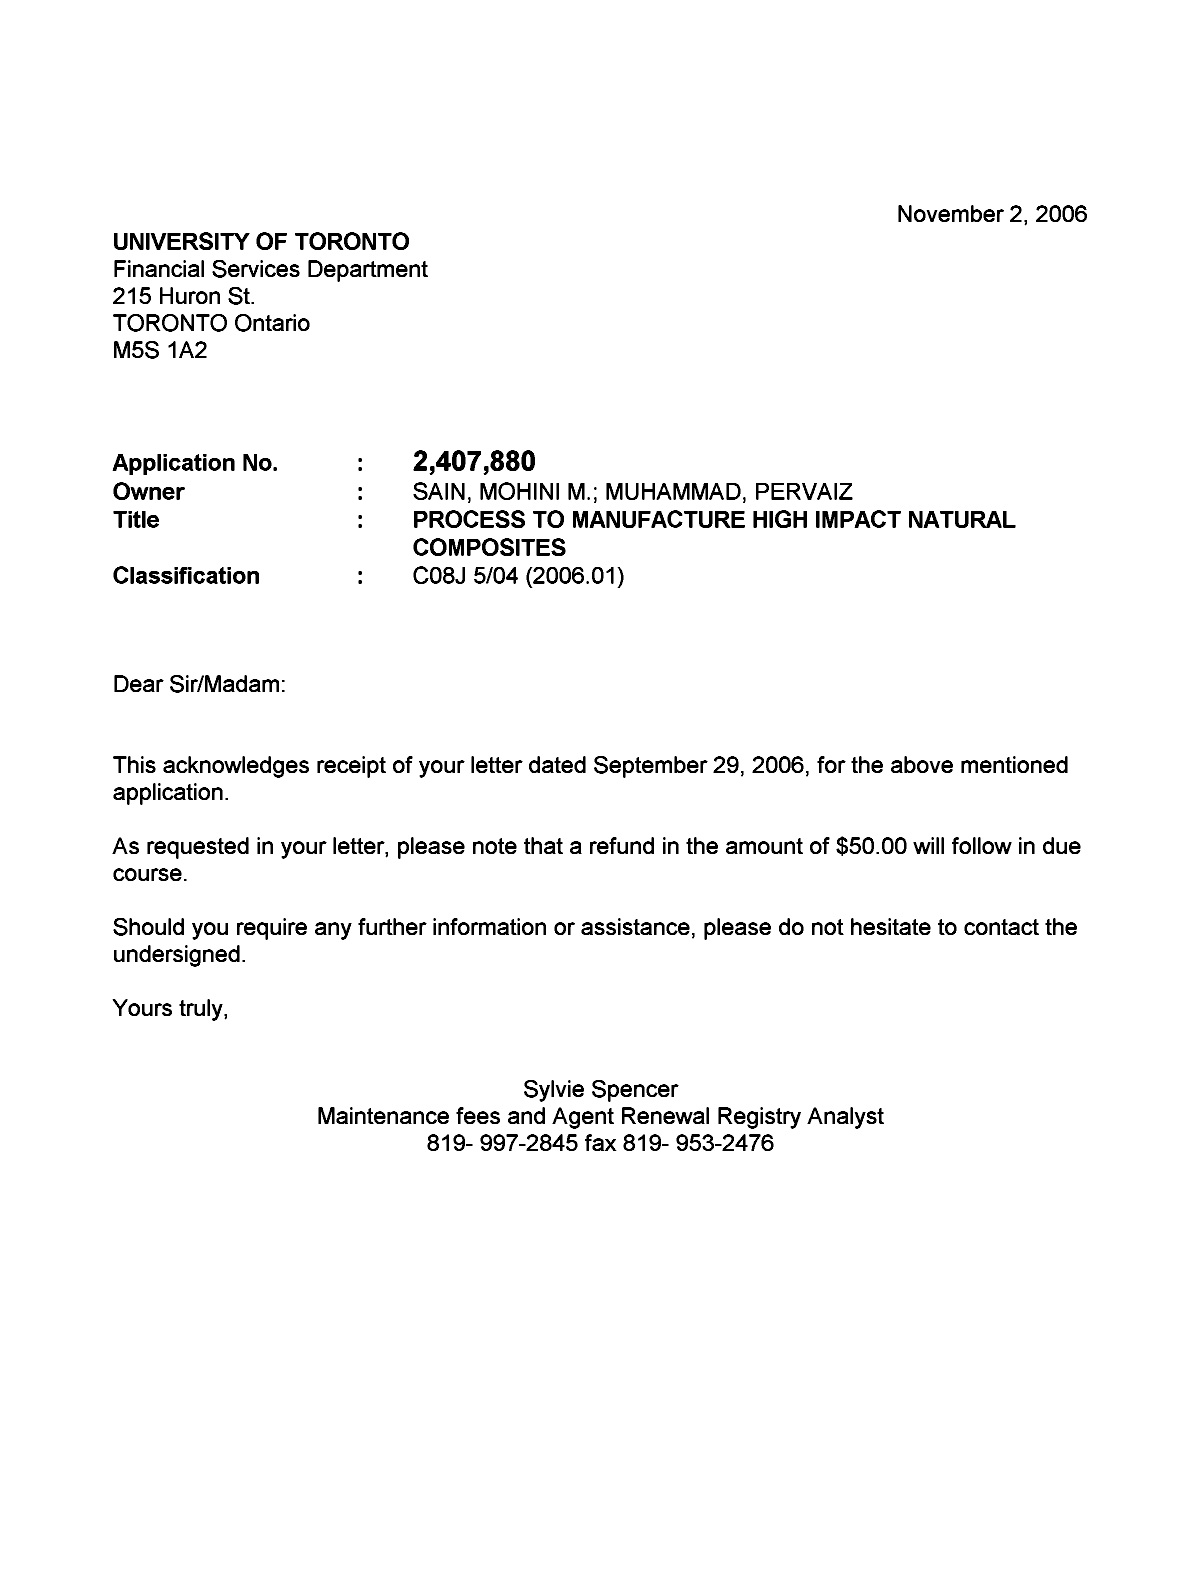 Canadian Patent Document 2407880. Correspondence 20051202. Image 1 of 1